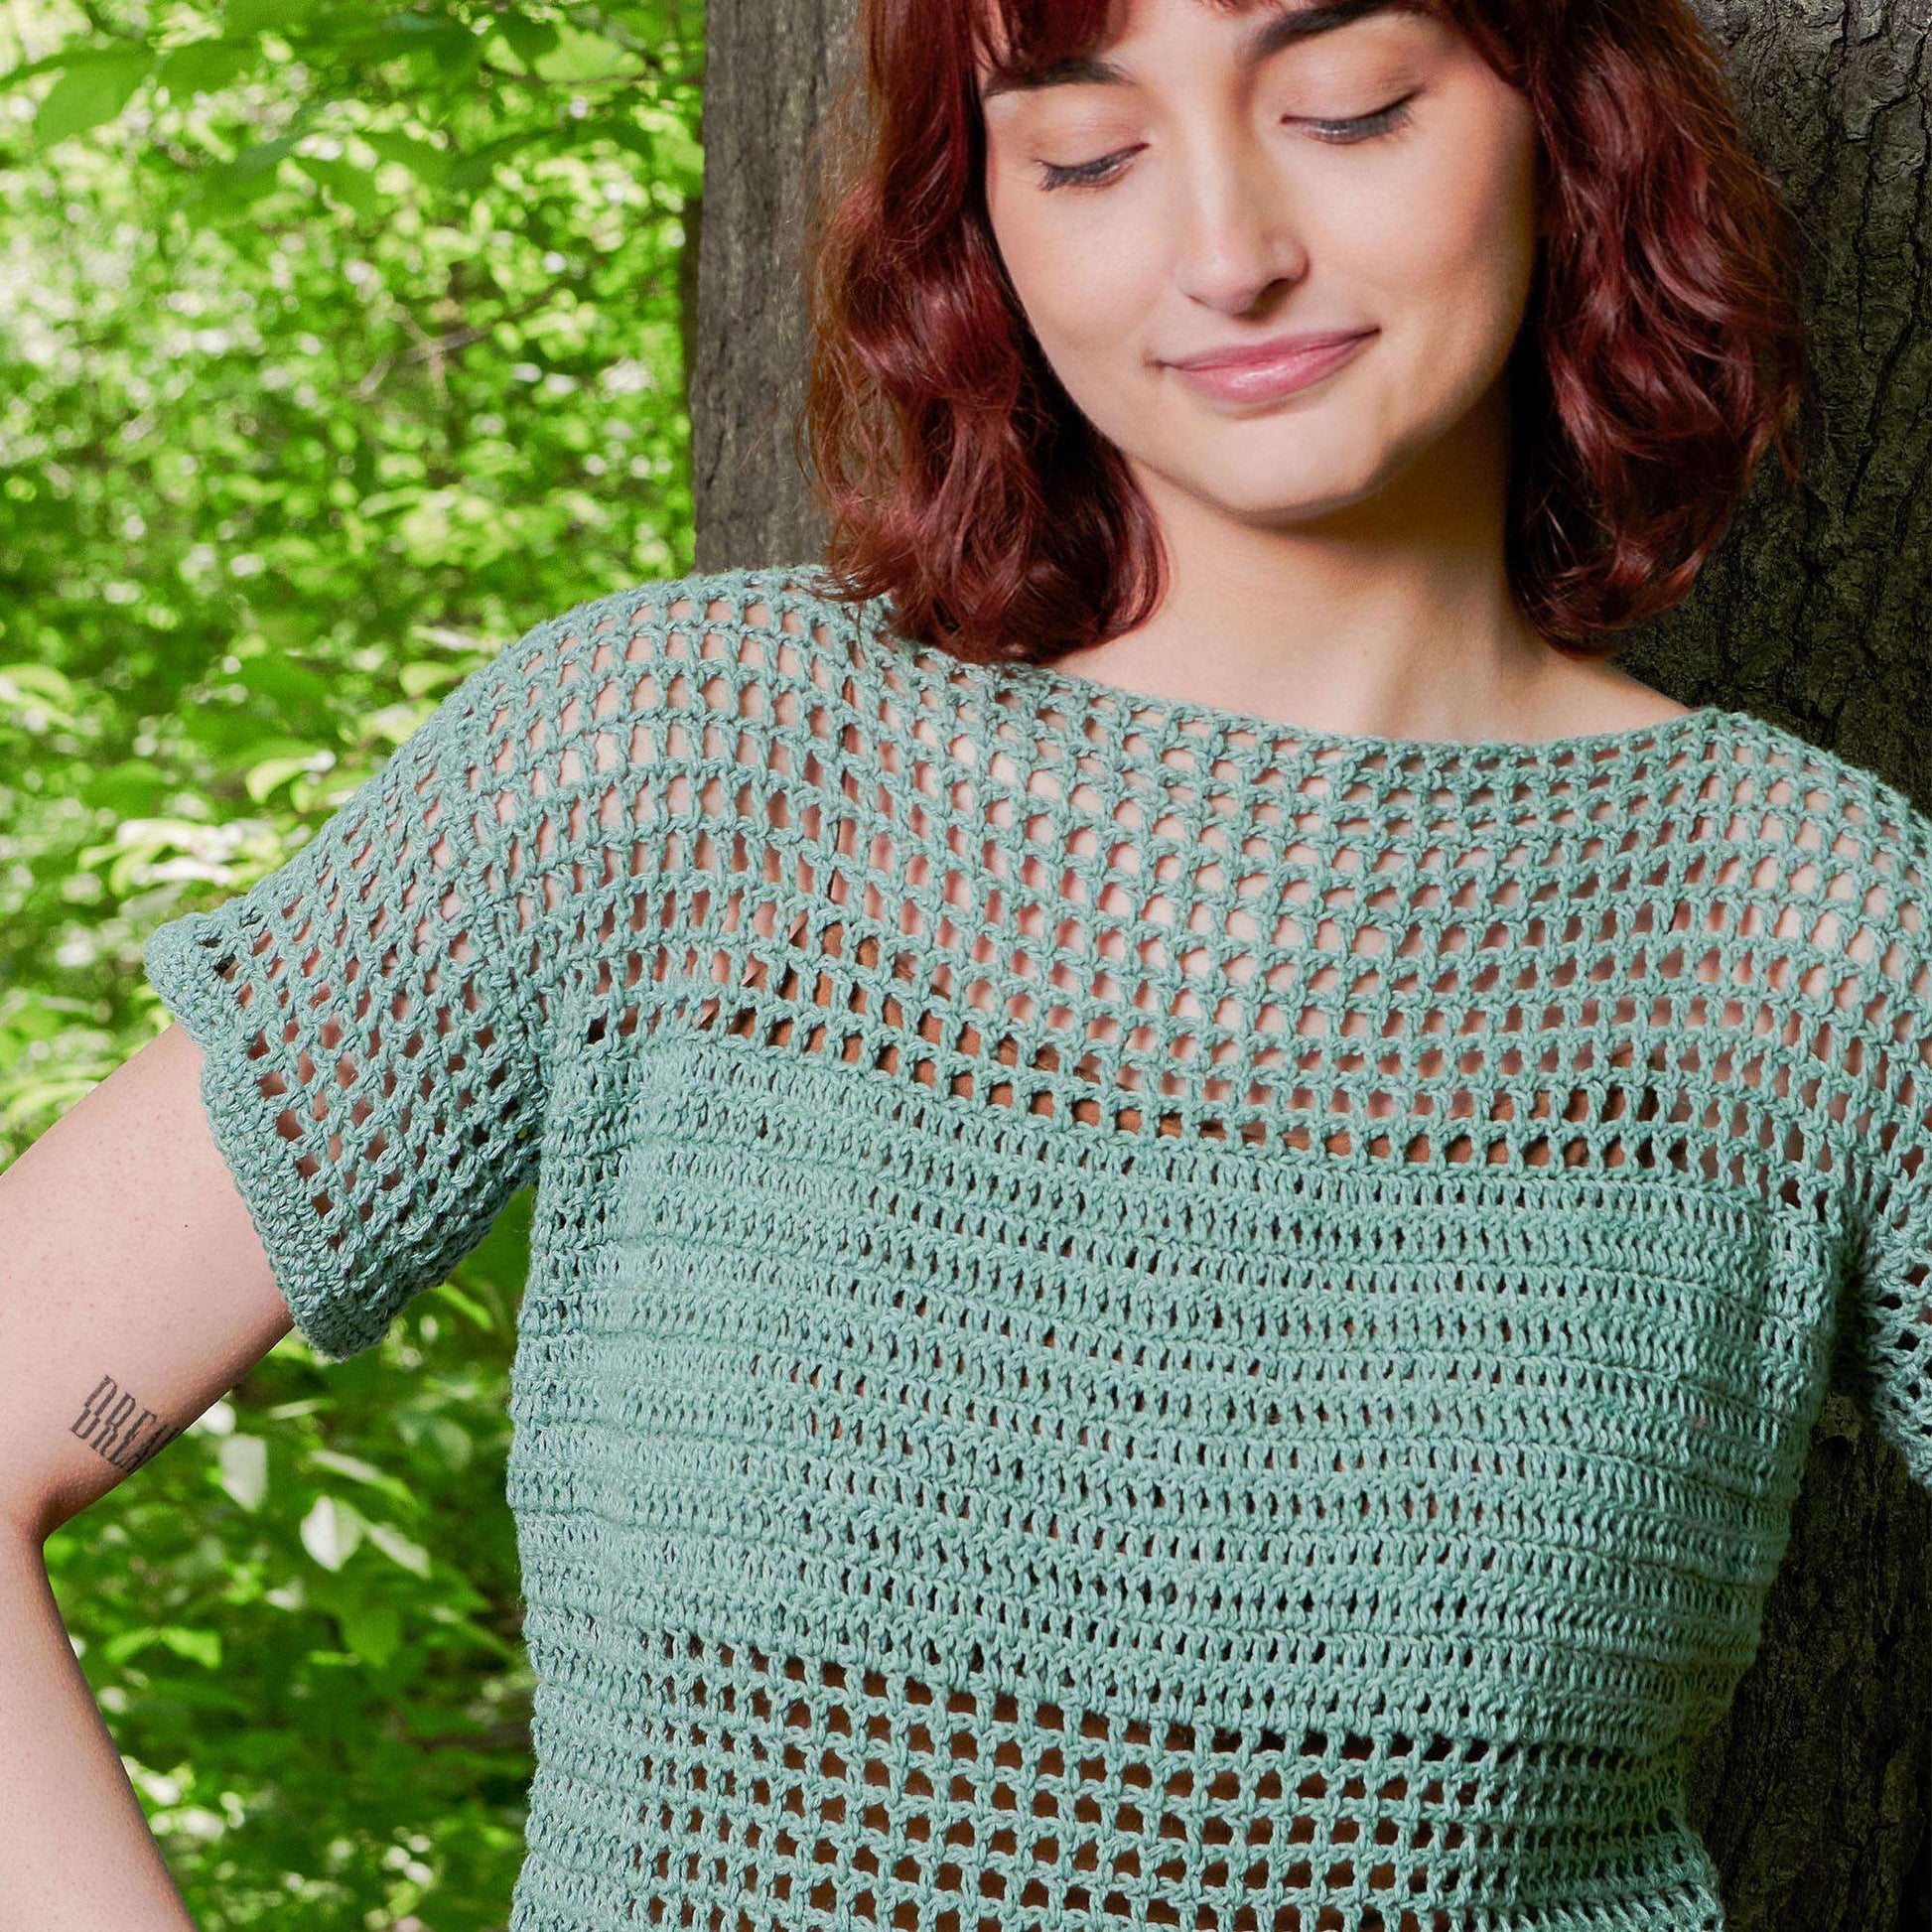 61 Free Women's Crochet Sweater Patterns - Cream Of The Crop Crochet